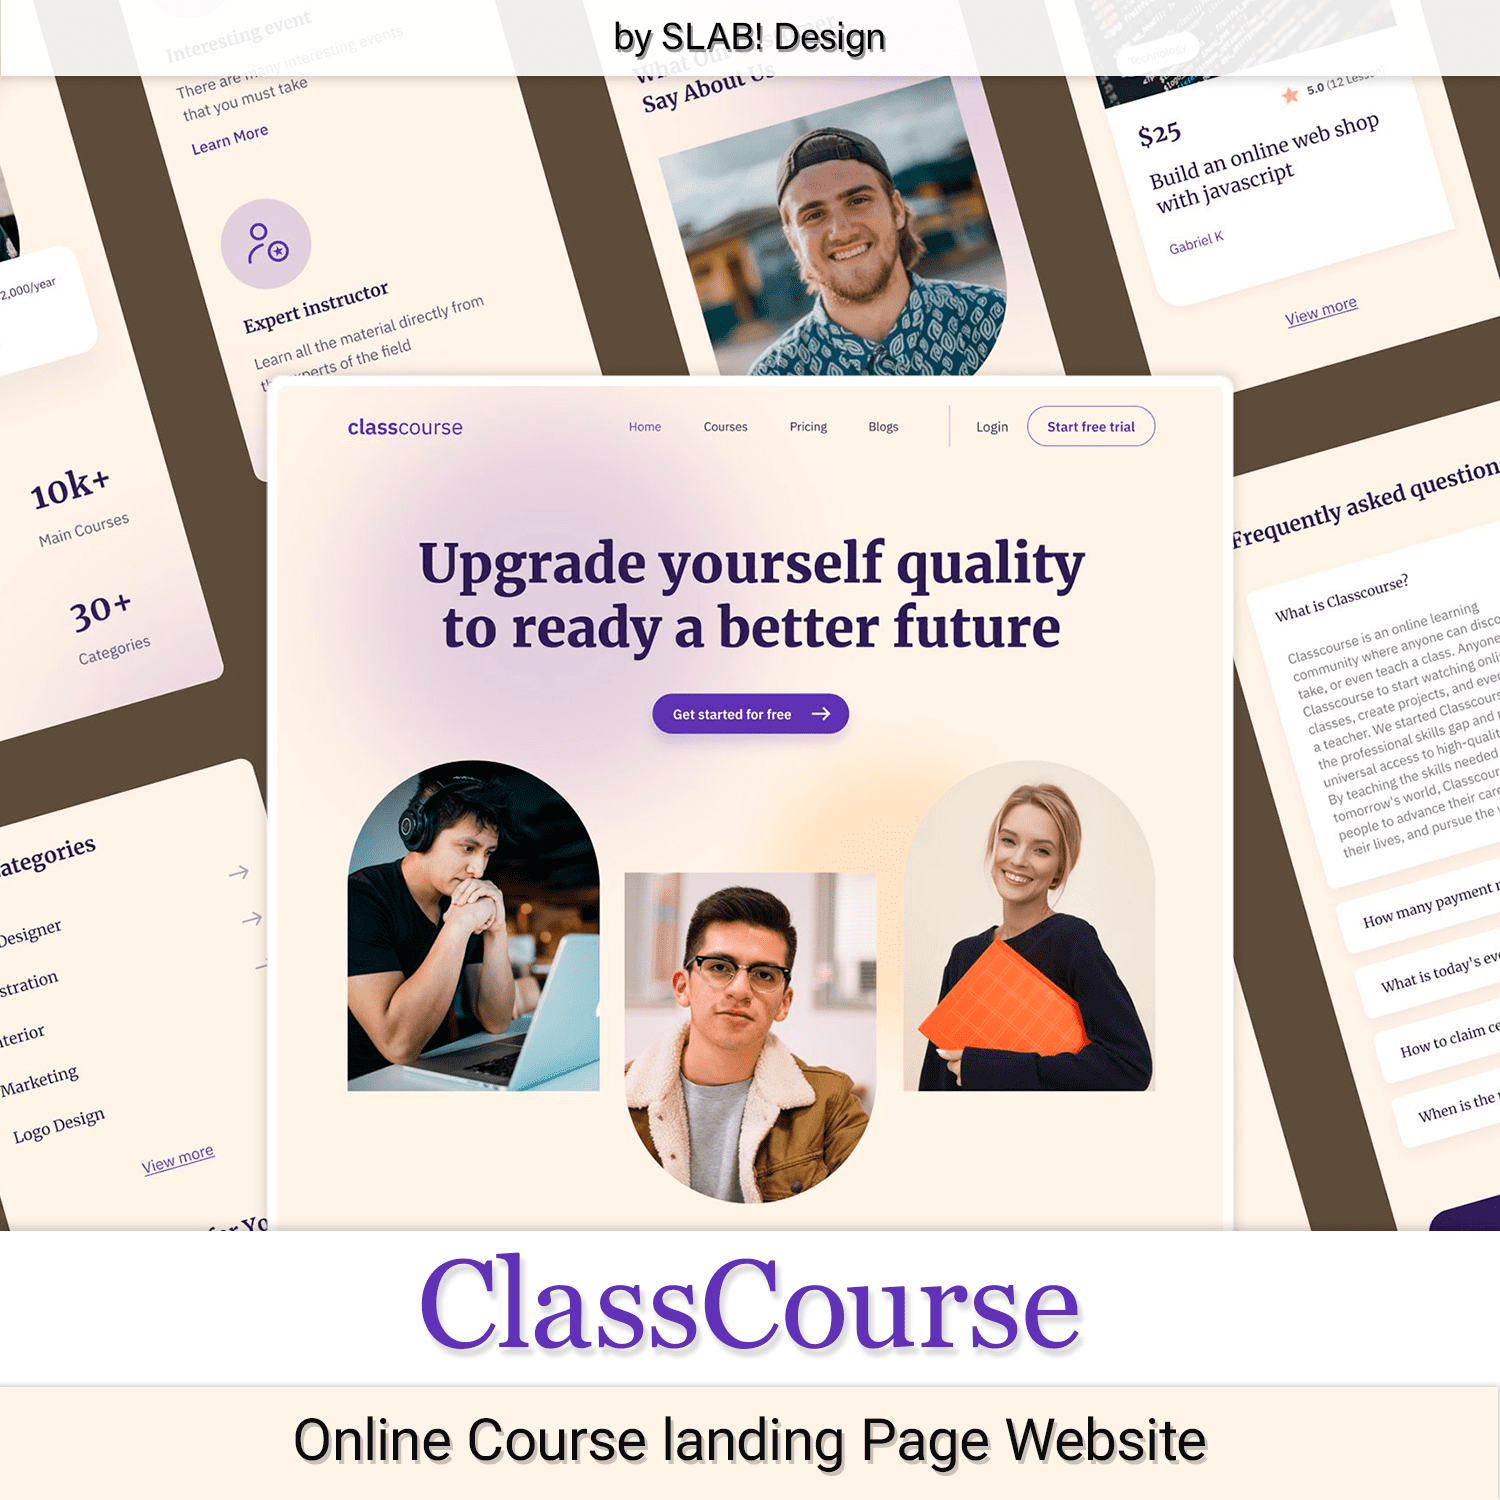 Online Course landing Page Website.